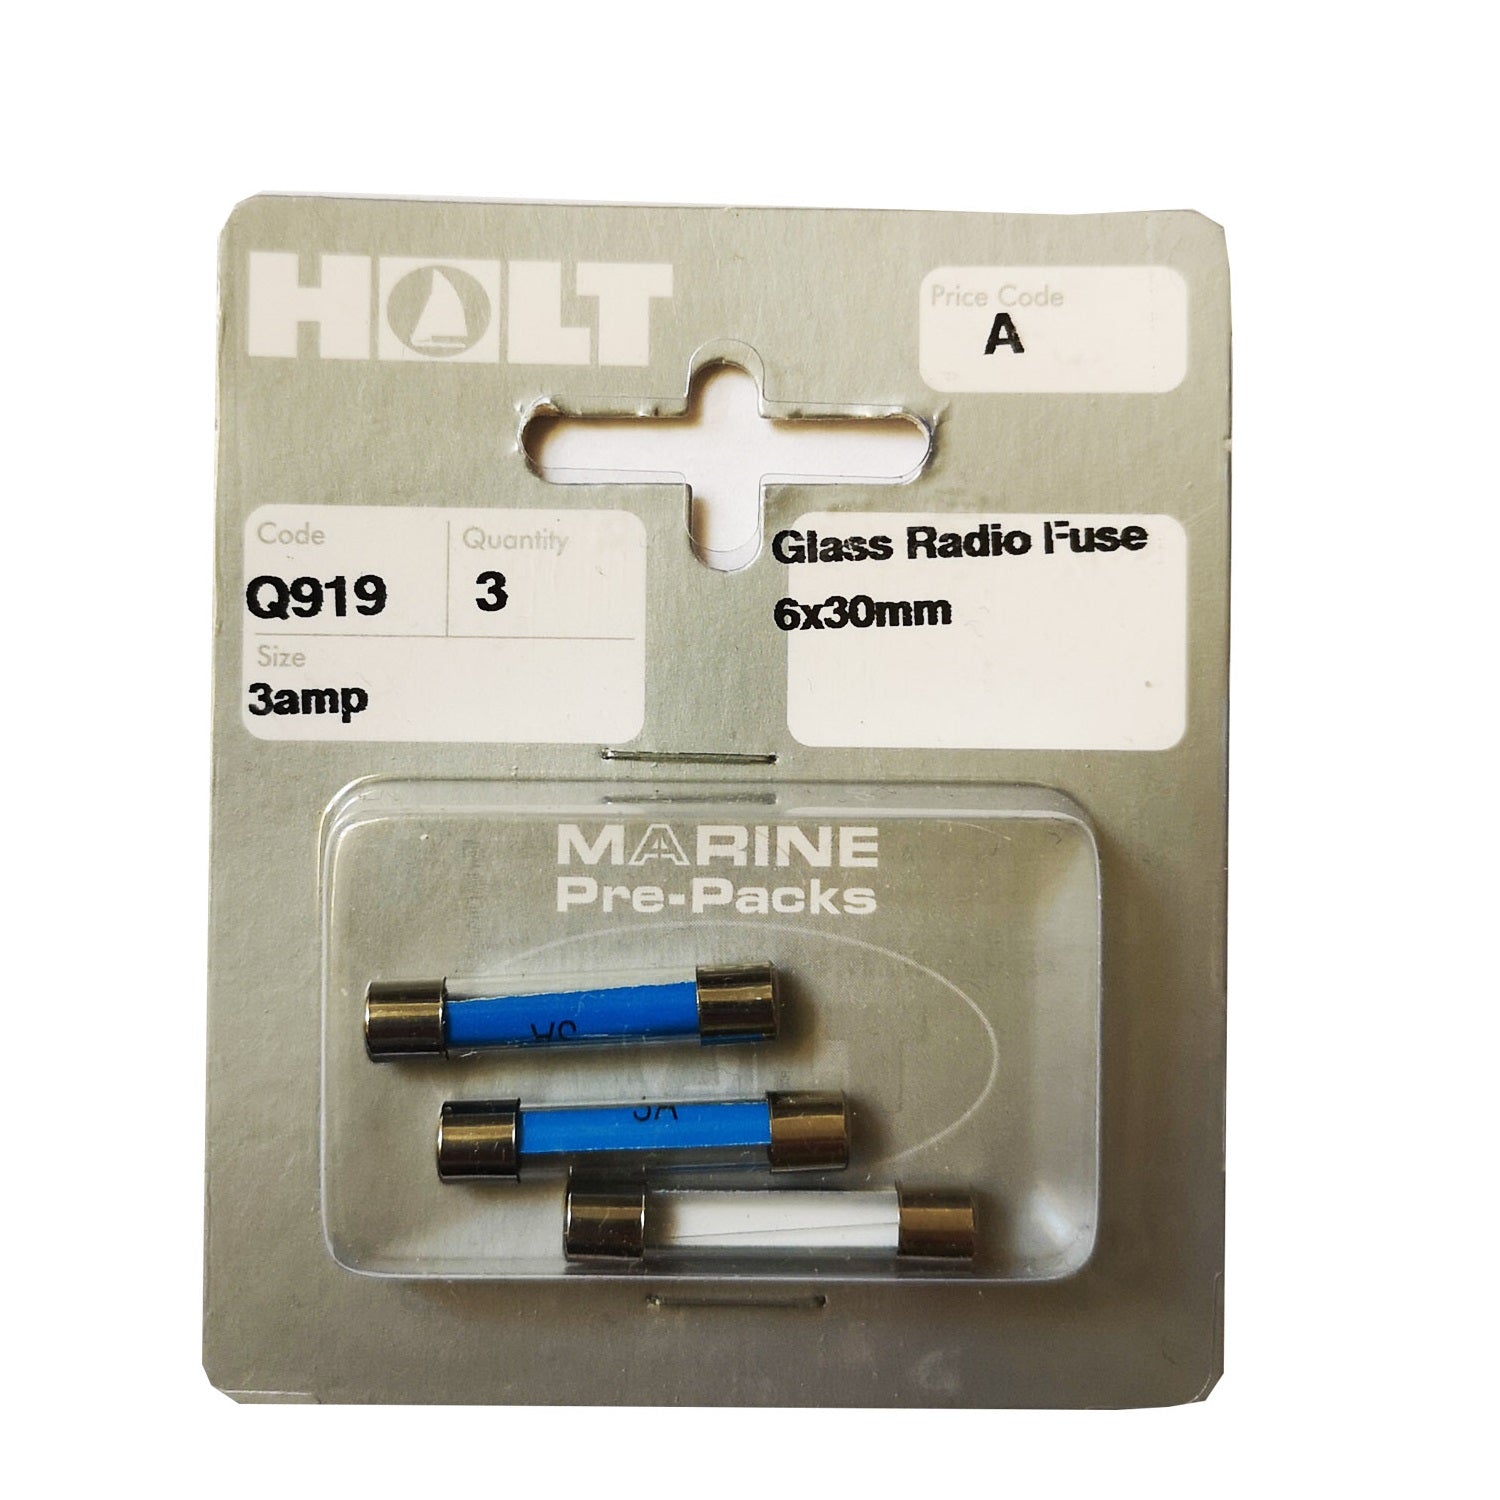 Holt Marine Q919 Glass Radio Fuse Pkt3 - 3amp - Premium Fuses from Holt Marine - Just $1.99! Shop now at W Hurst & Son (IW) Ltd